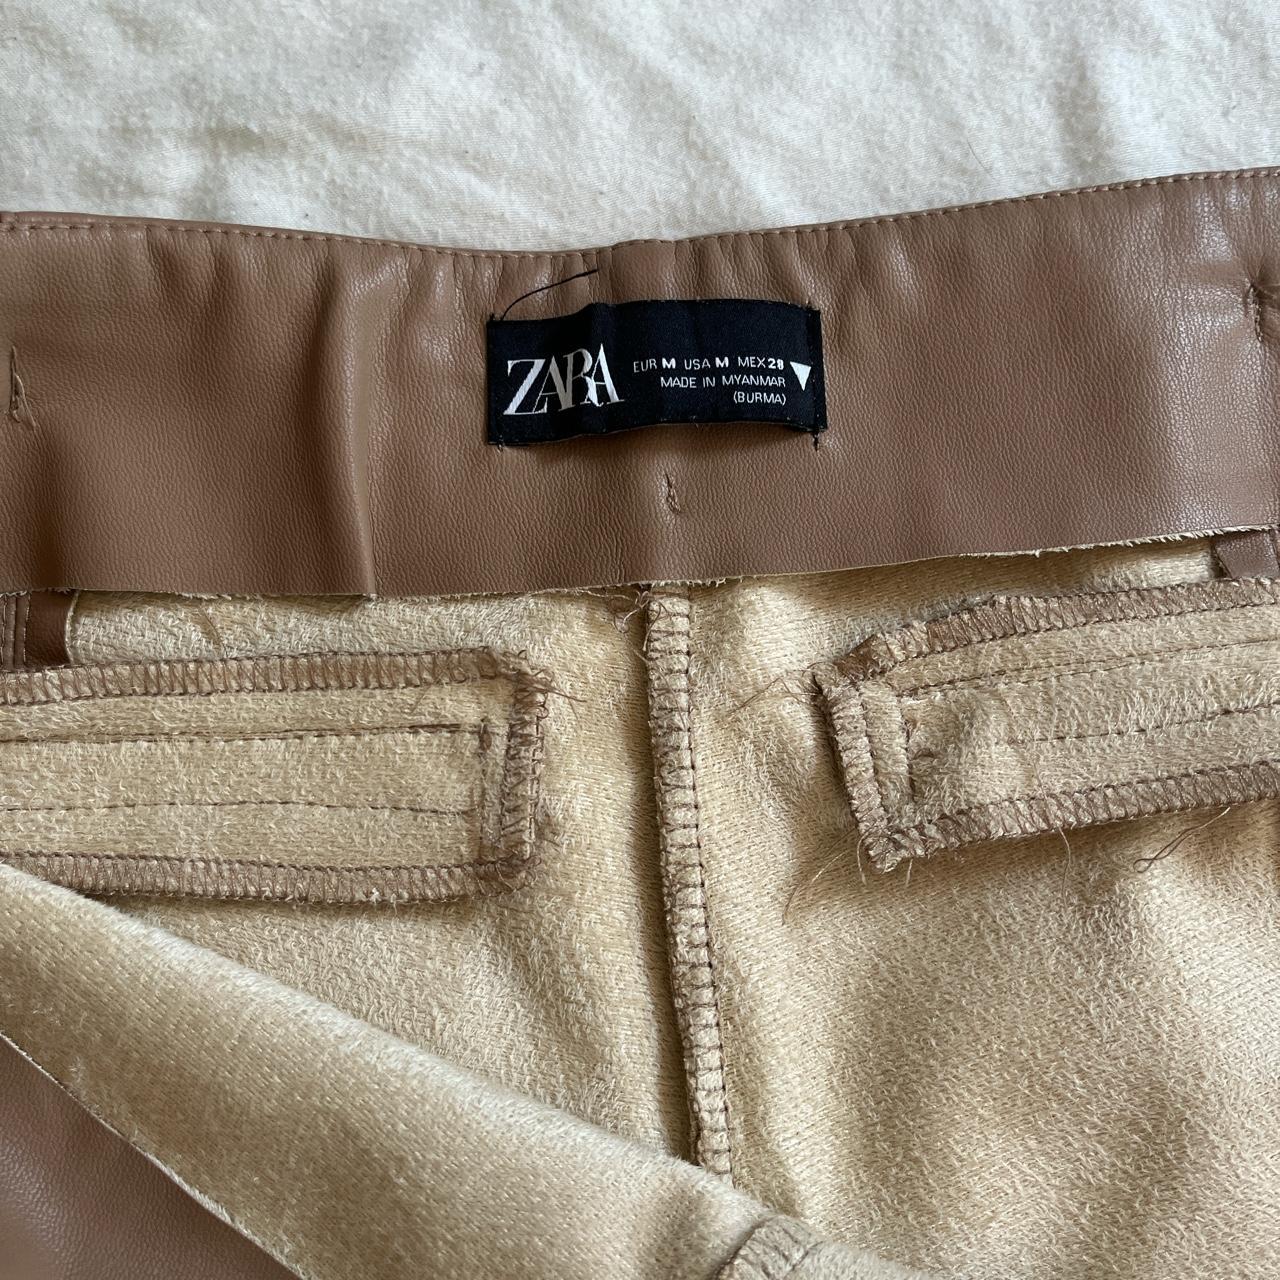 Leather pants from Zara size medium